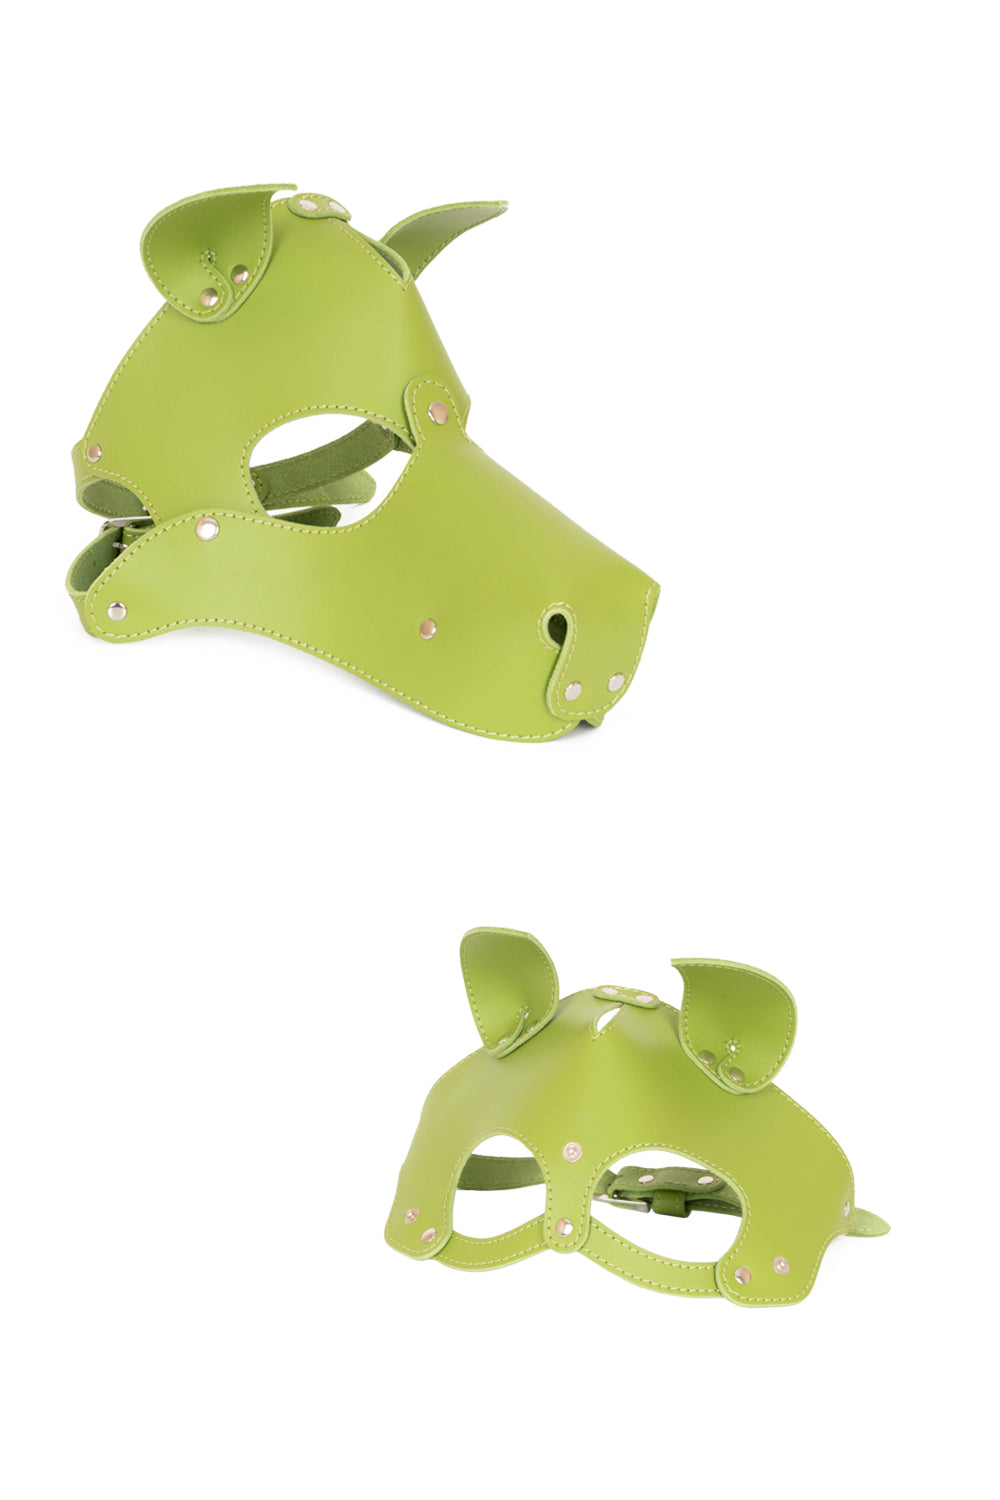 Dog mask with detachable muzzle. Blue